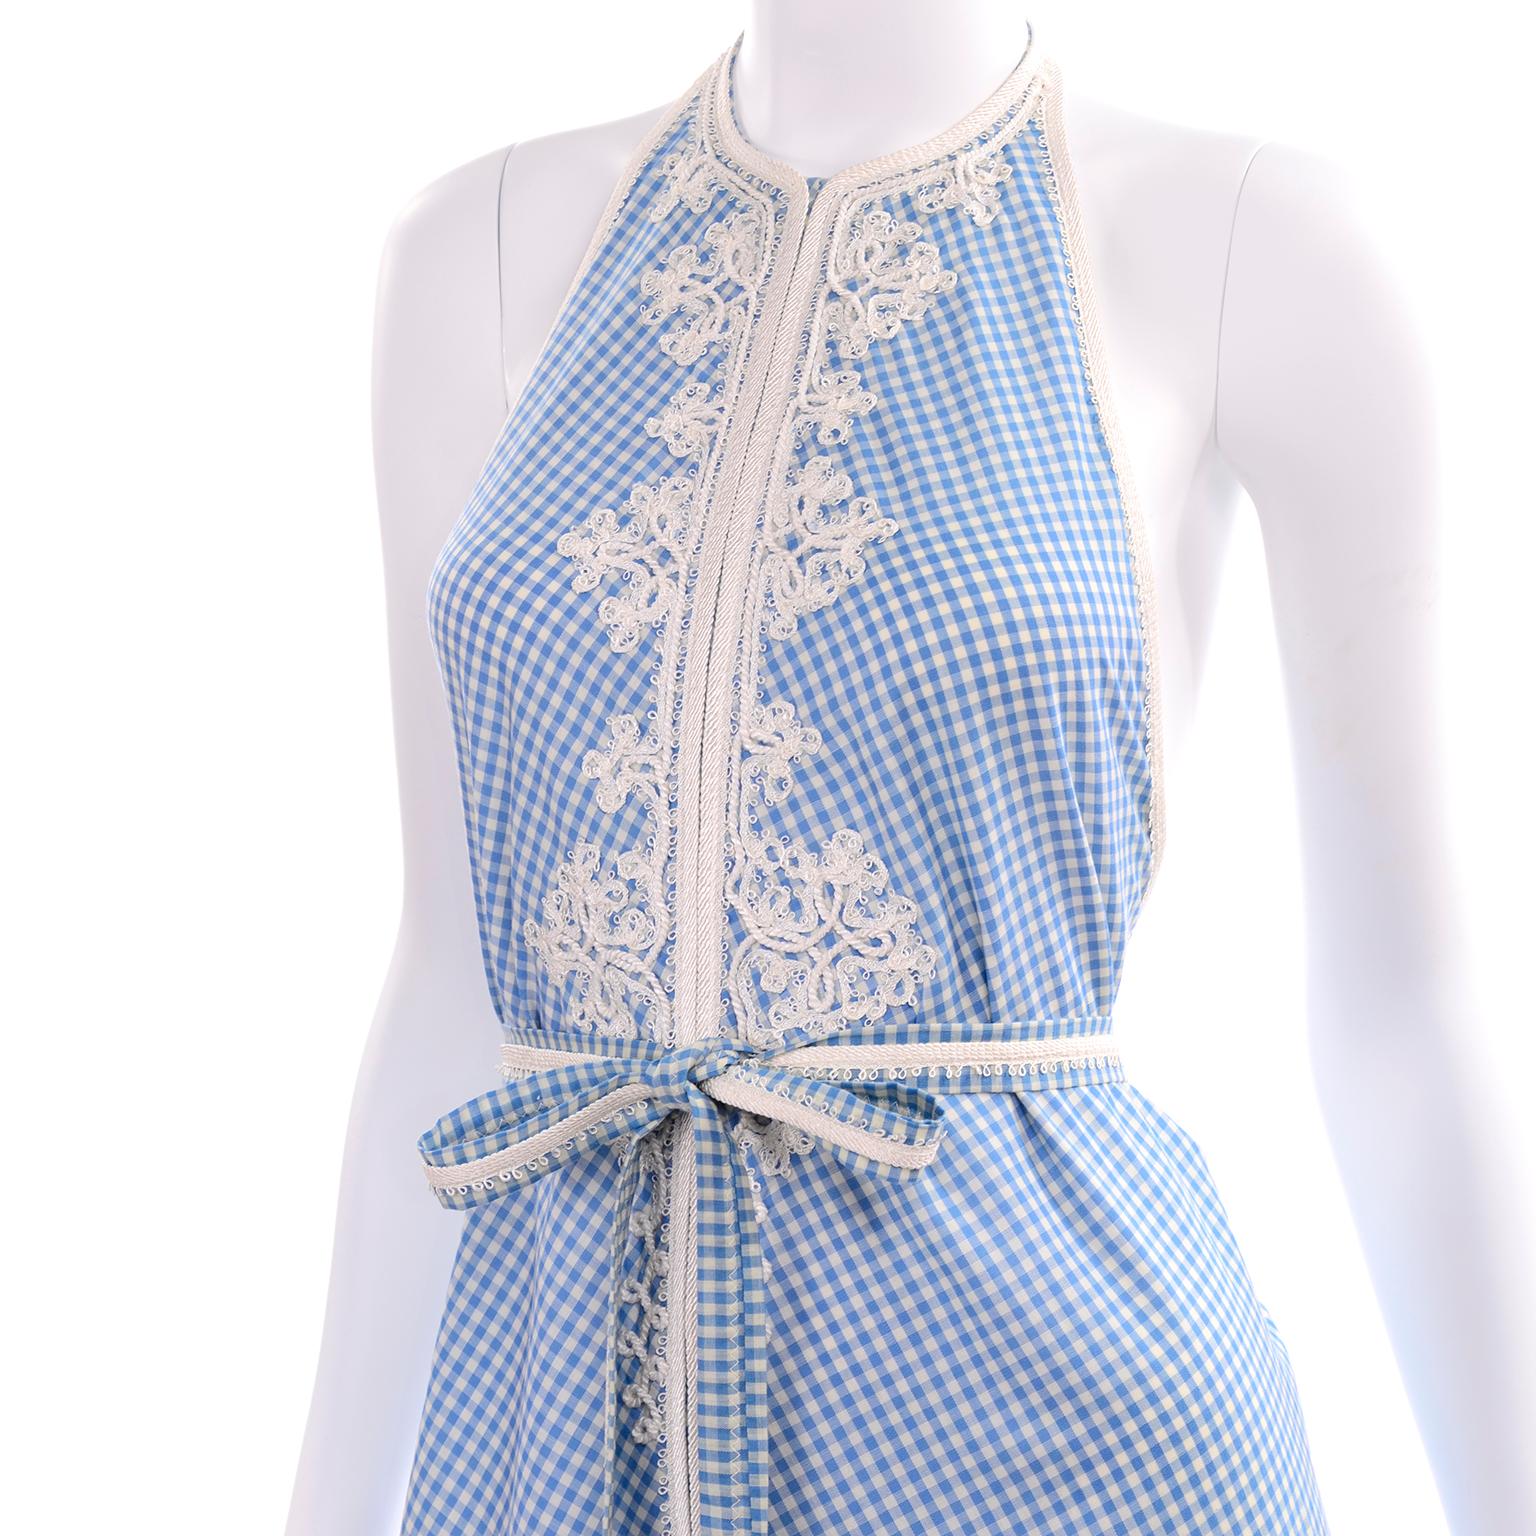 1970s Anne Klein Vintage Halter Dress in Blue and White Gingham Check w applique 7